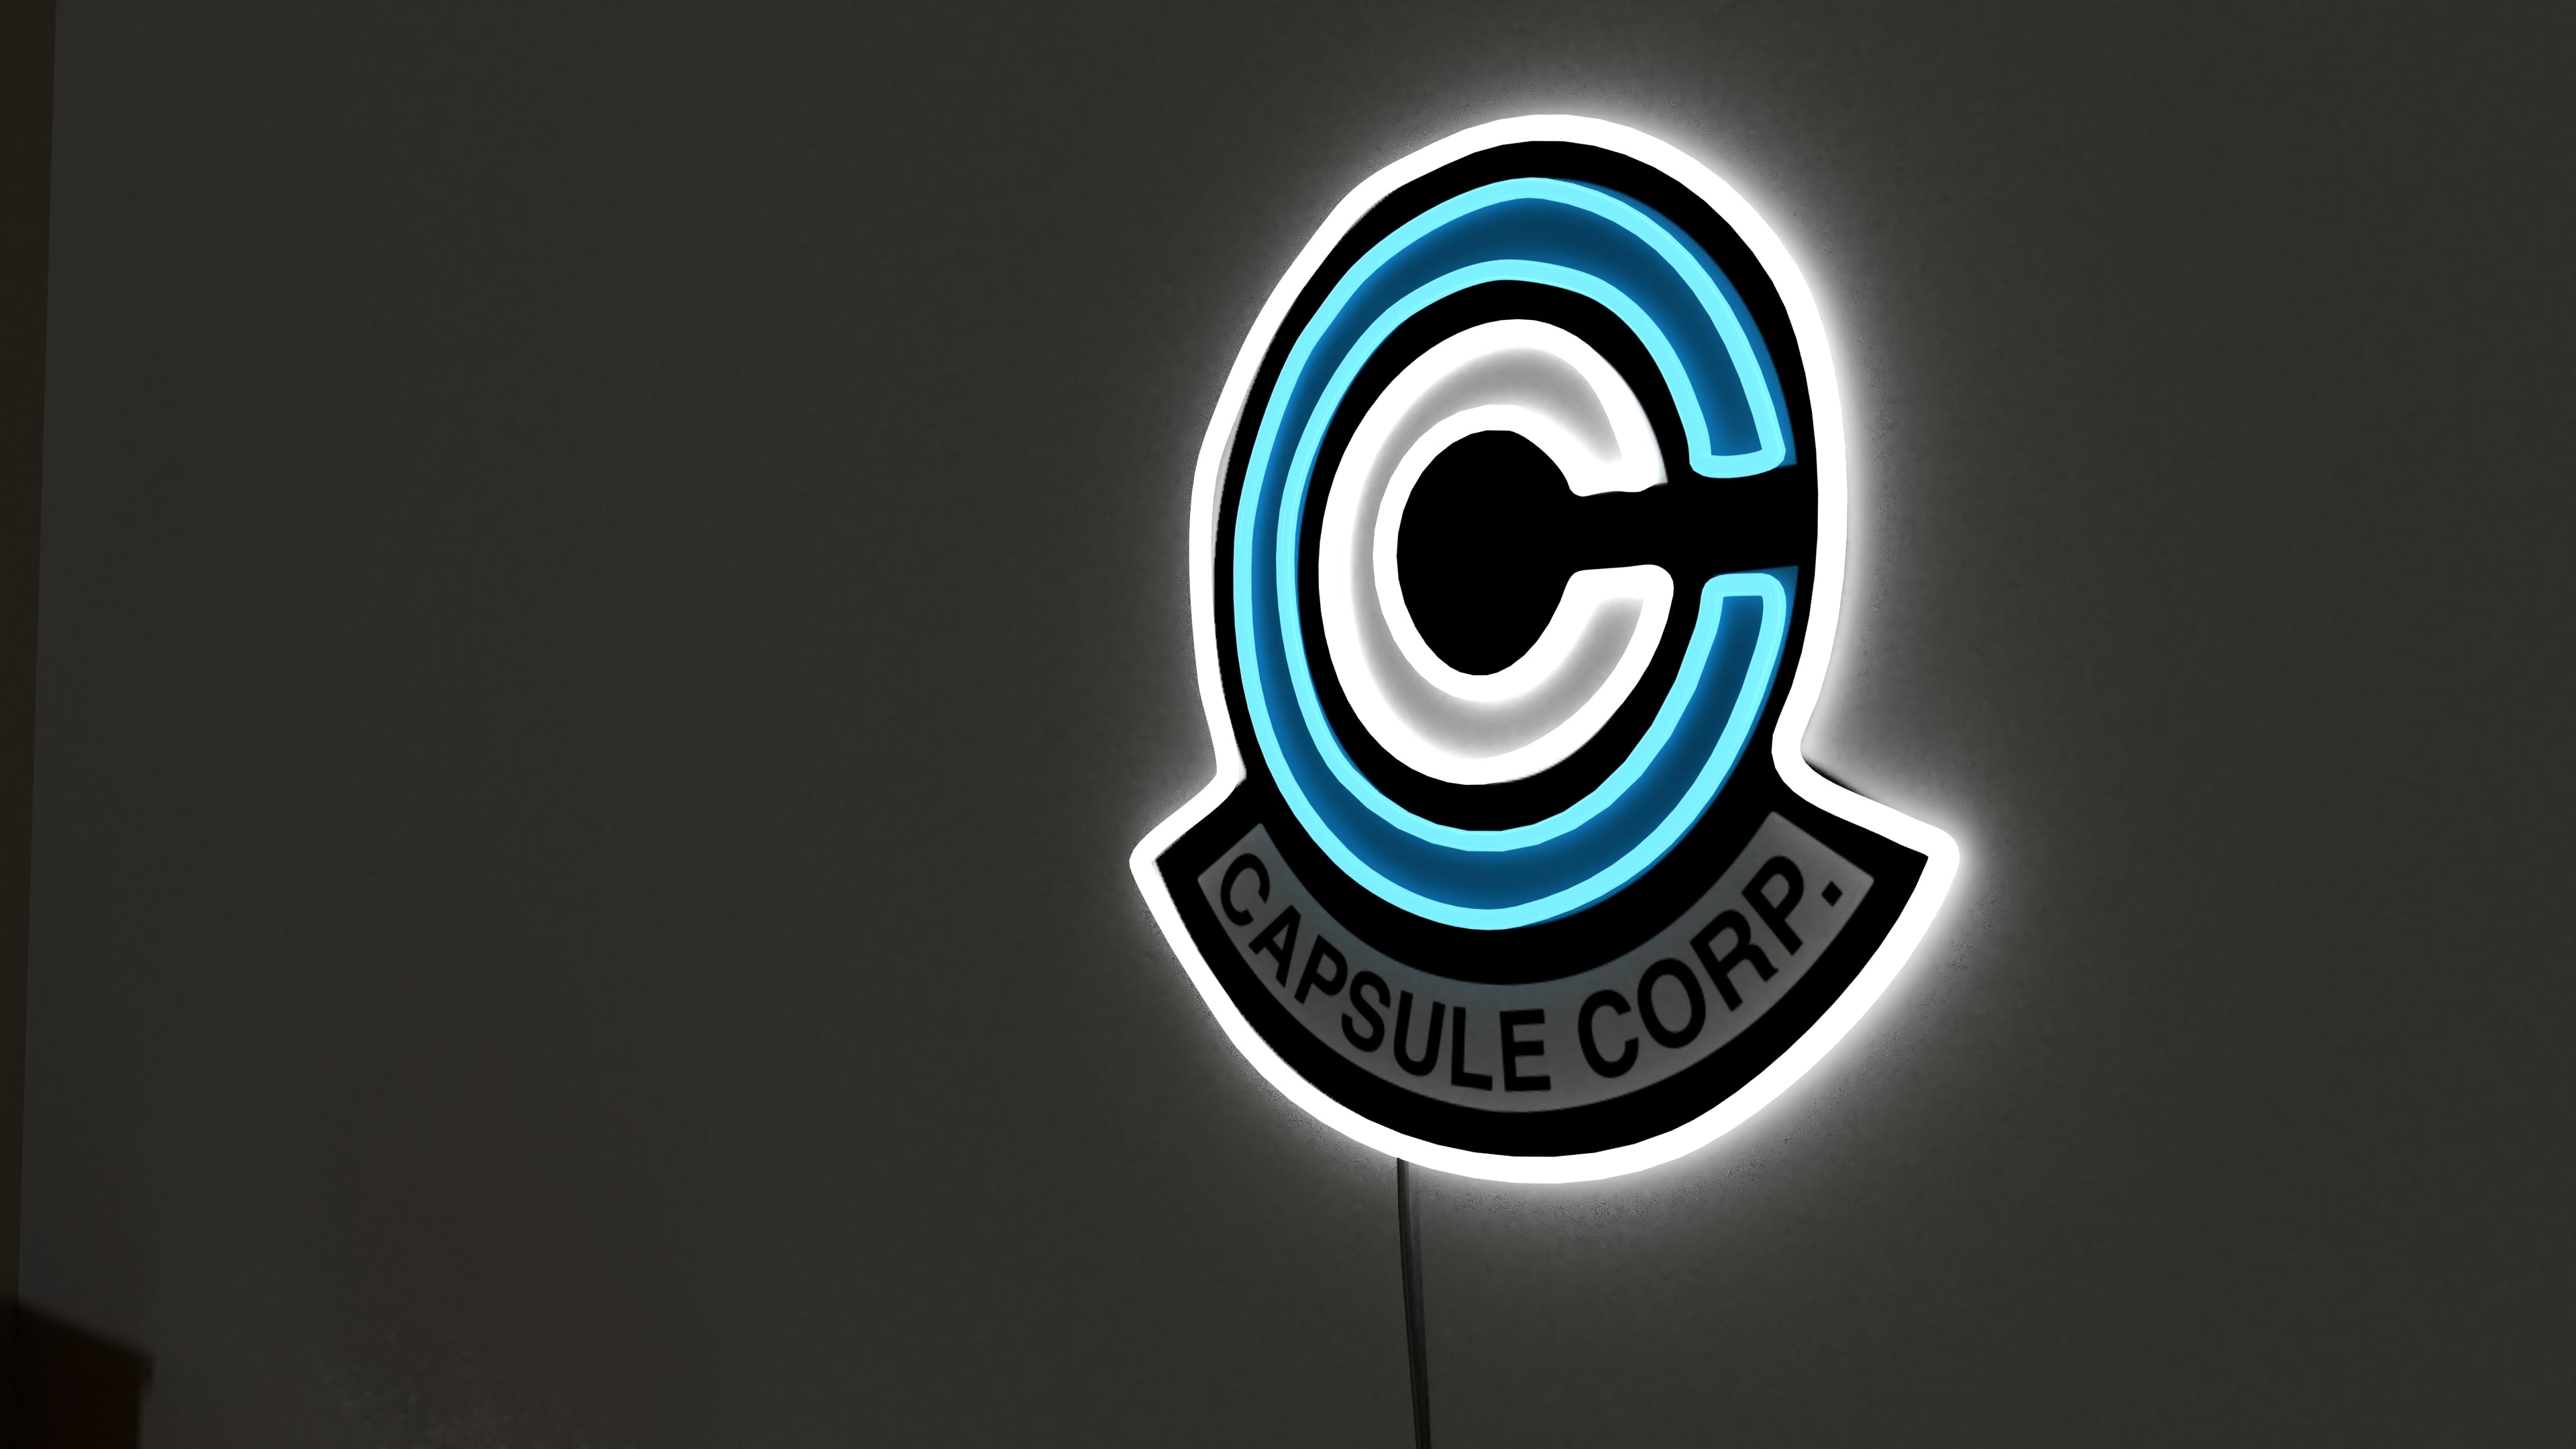 Capsule Corp Neon Sign